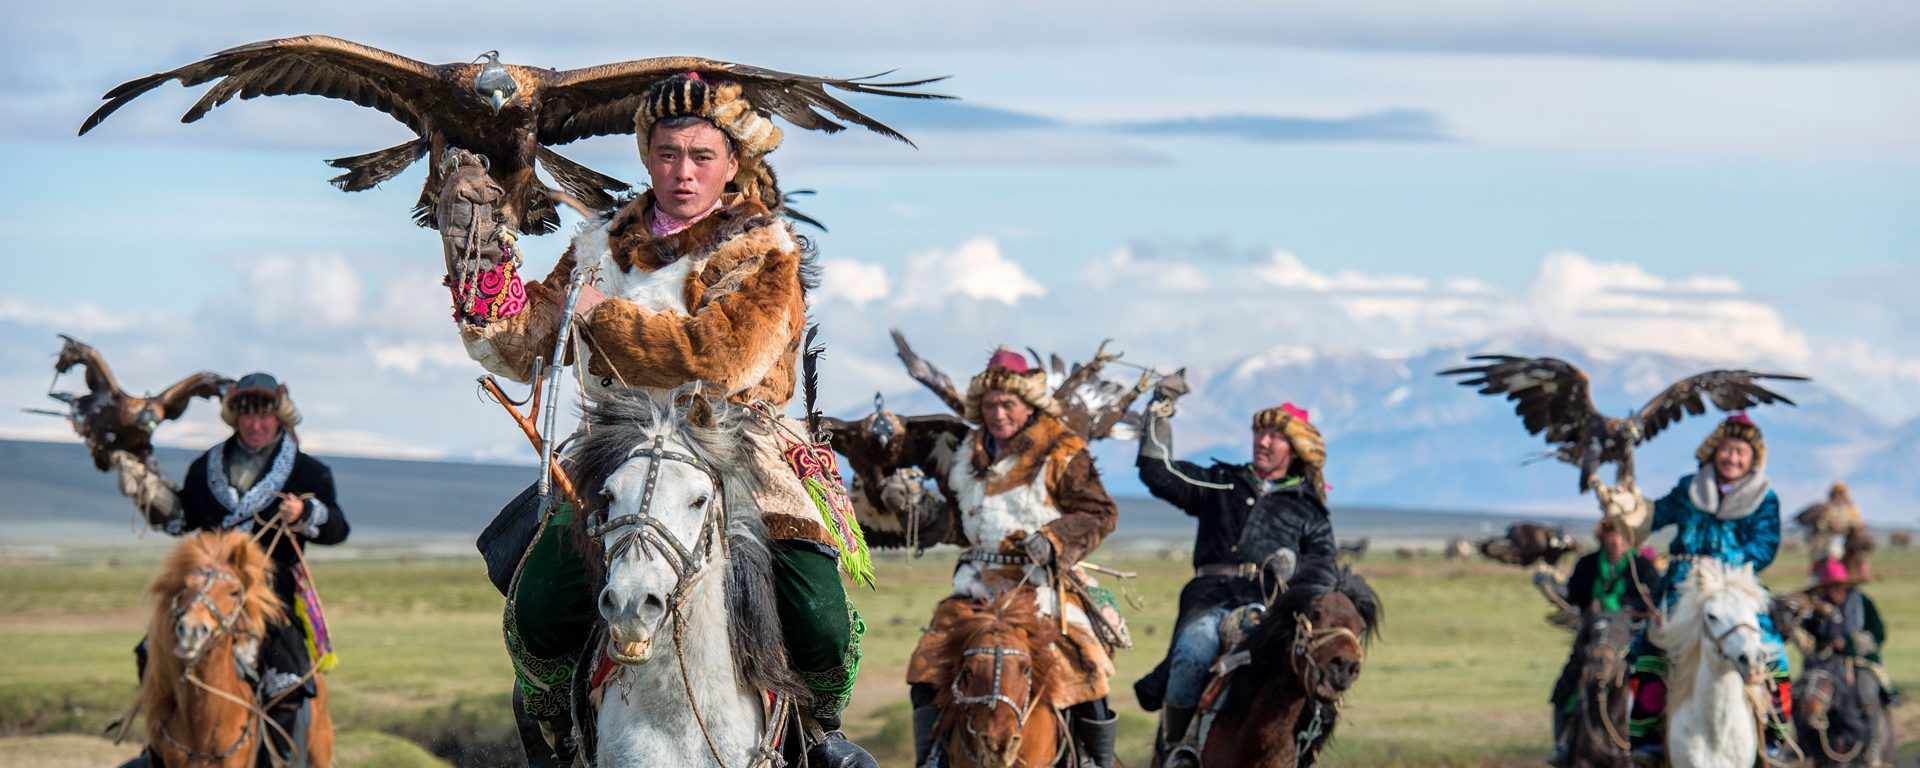 Kazakh eagle hunters on horseback in the the Altai mountains, Mongolia